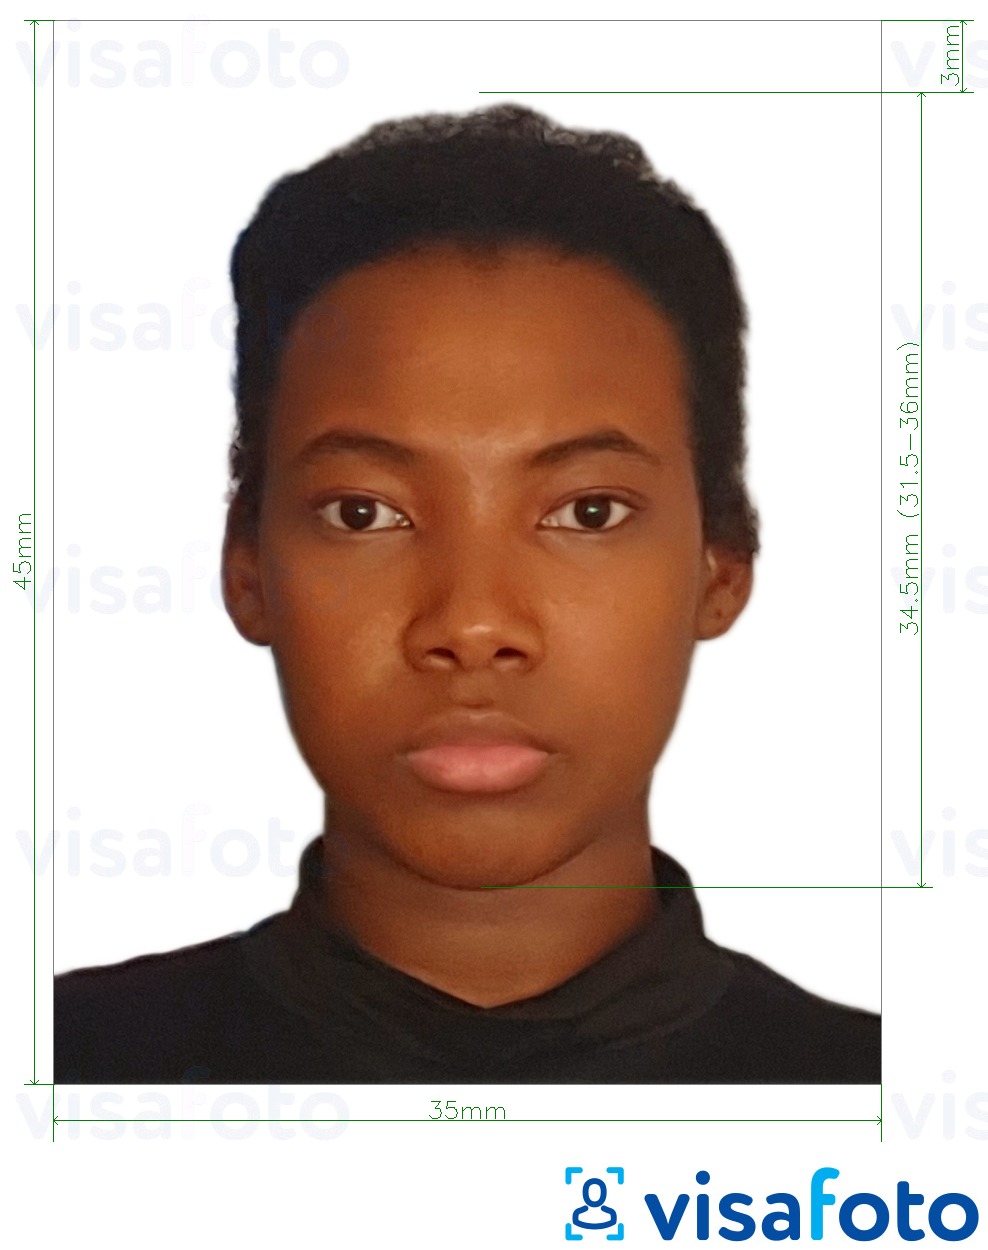 Contoh dari foto untuk Seychelles passport 35x45 mm (hingga 45x50 mm) dengan ukuran spesifikasi yang tepat